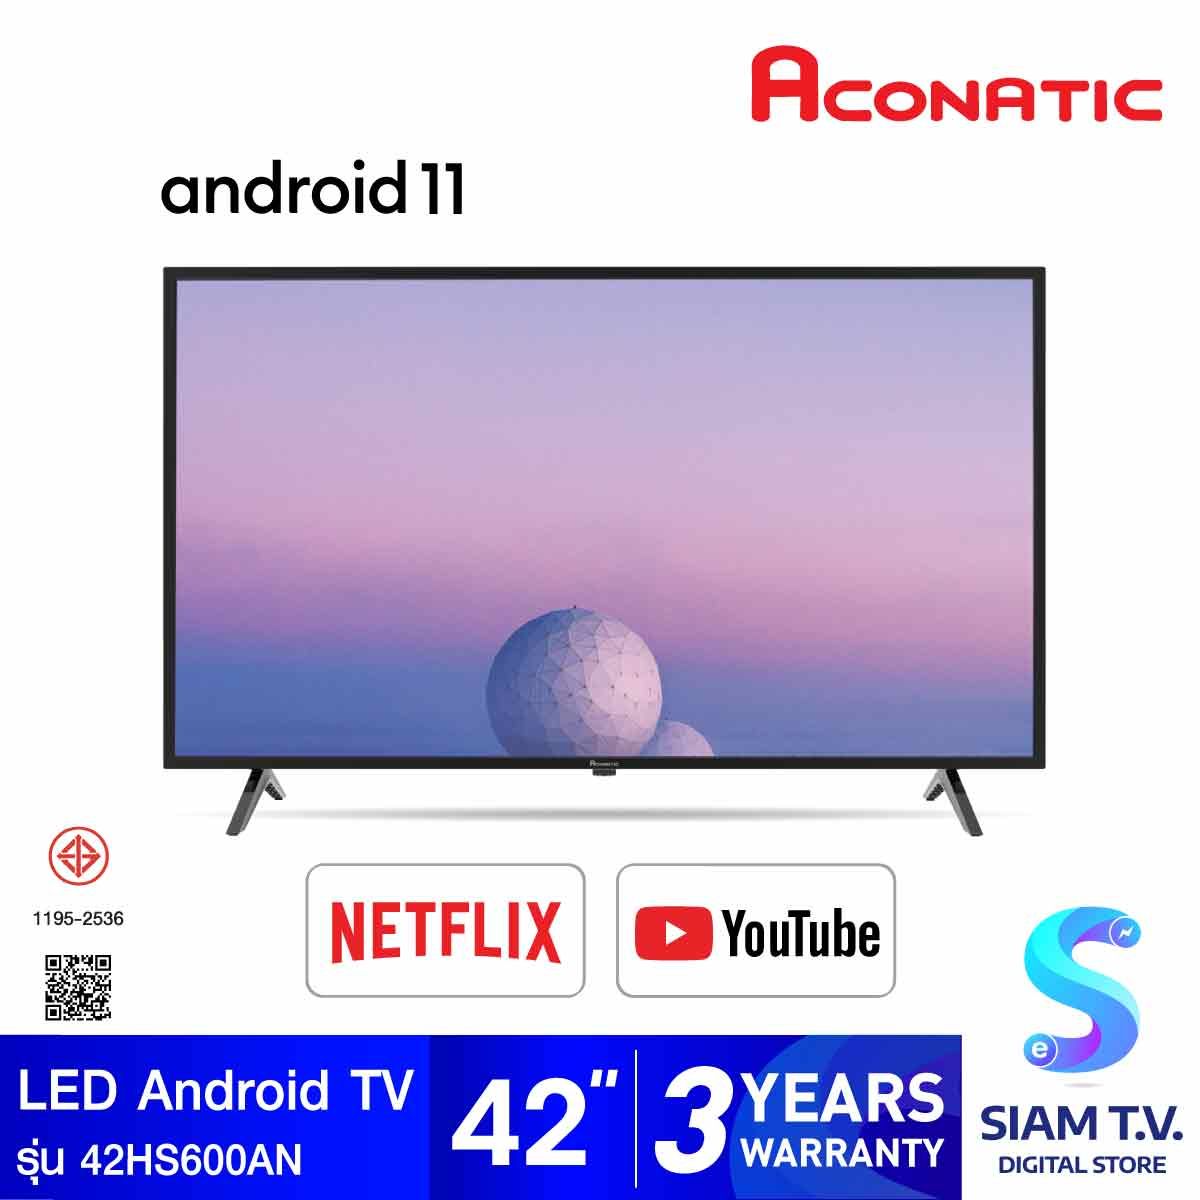 ACONATIC  LED  Android TV รุ่น 42HS600AN Android 11 สมาร์ททีวี 42 นิ้ว